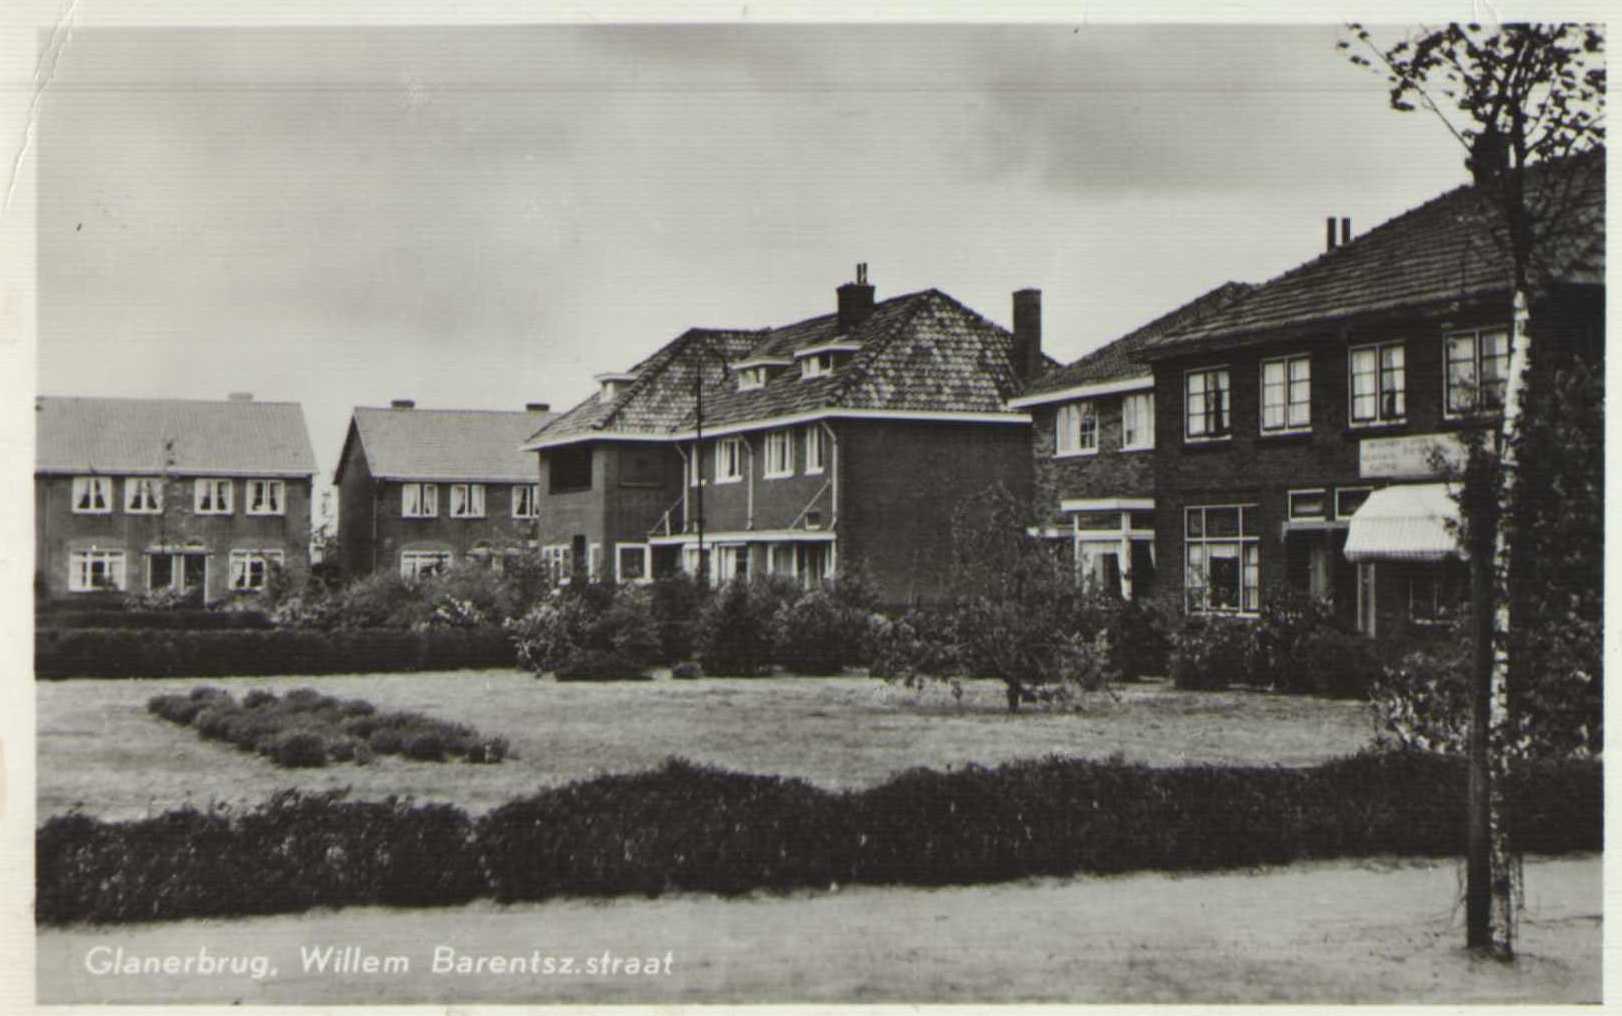 Willem-Barentszstraat-glanerbrug-1954.jpg